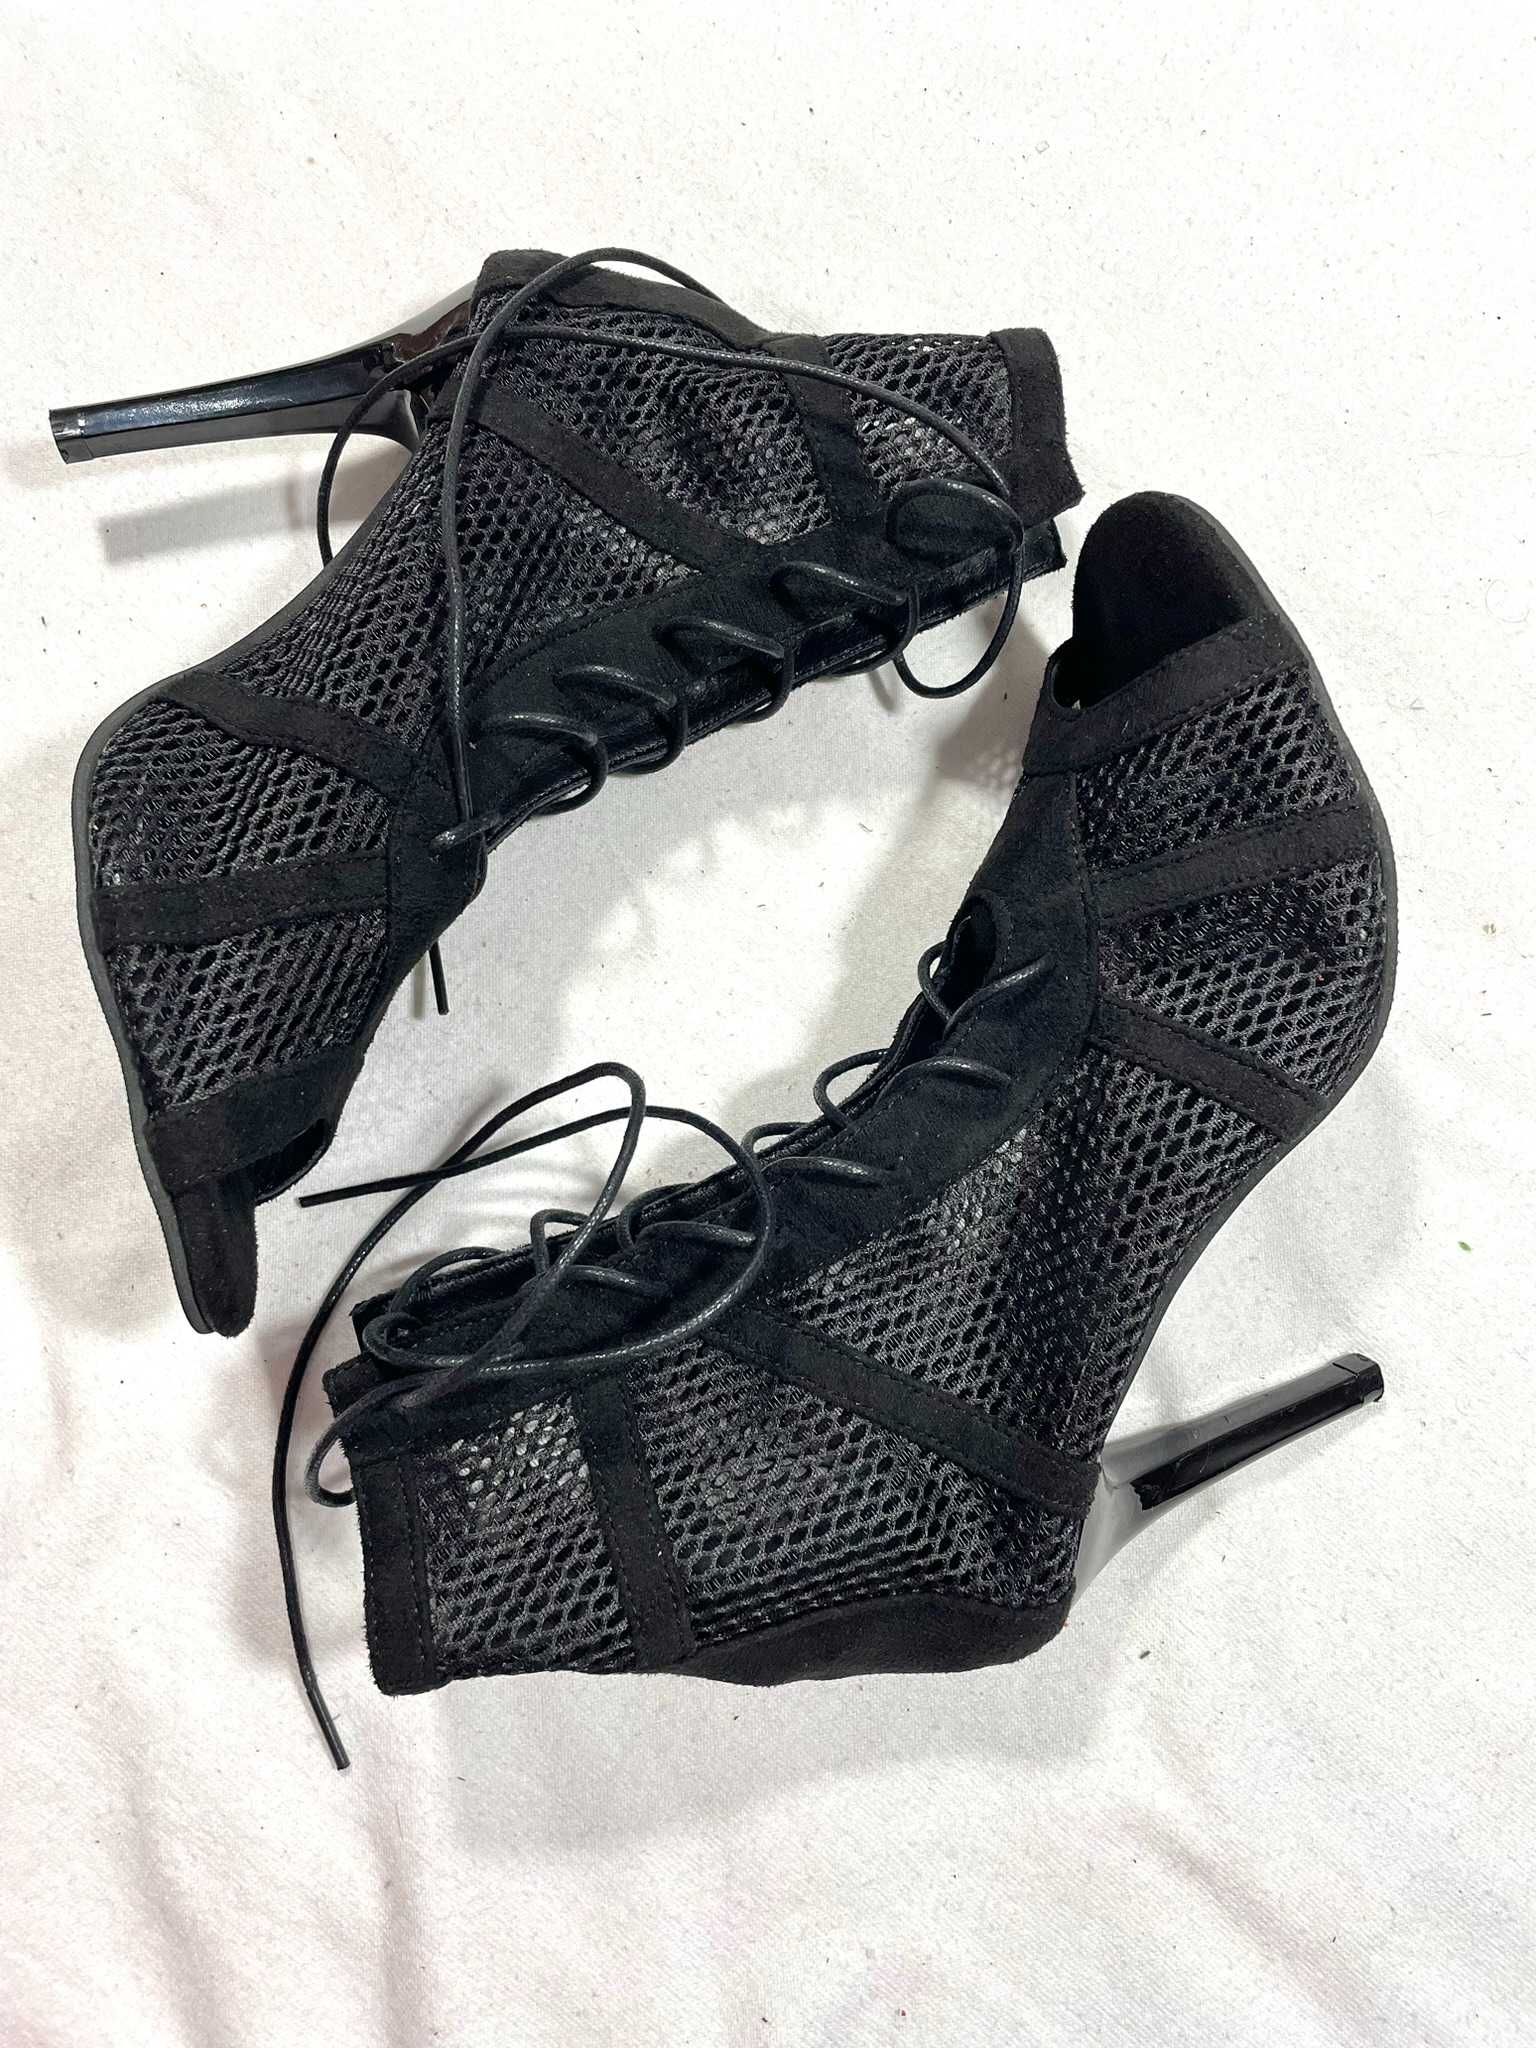 Nowe buty do tańca High heels 41